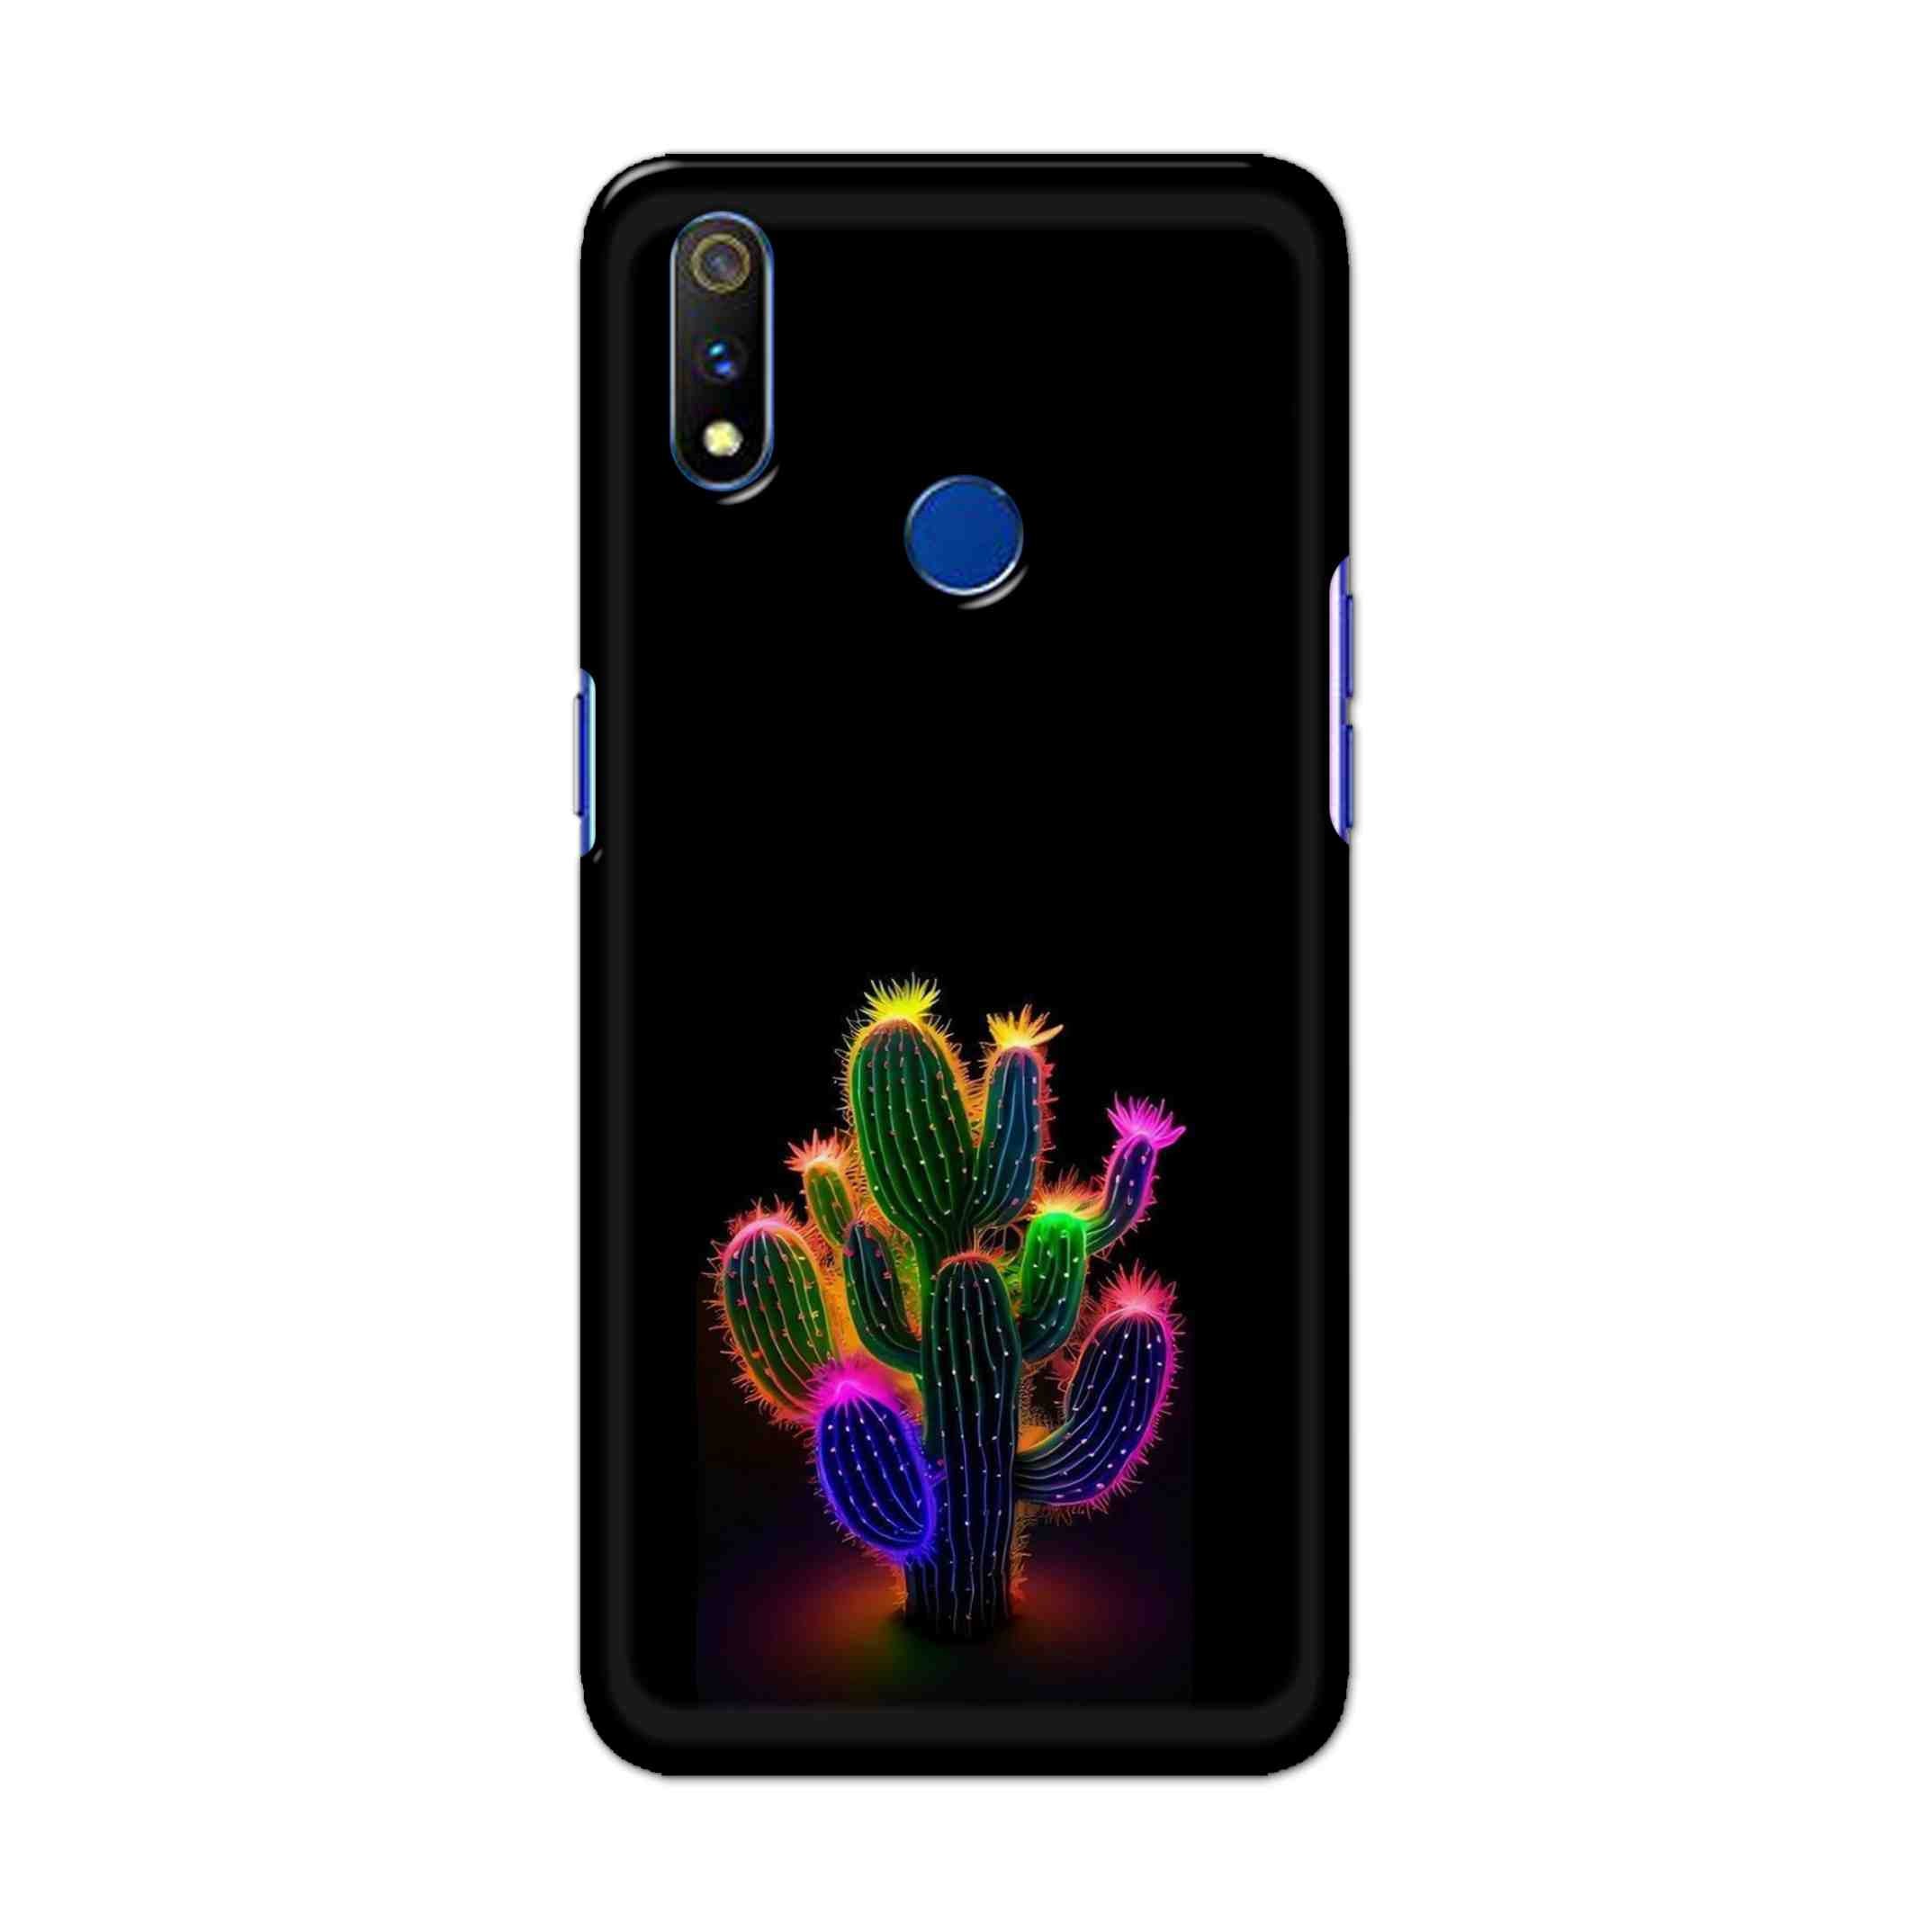 Buy Neon Flower Hard Back Mobile Phone Case Cover For Realme 3 Pro Online